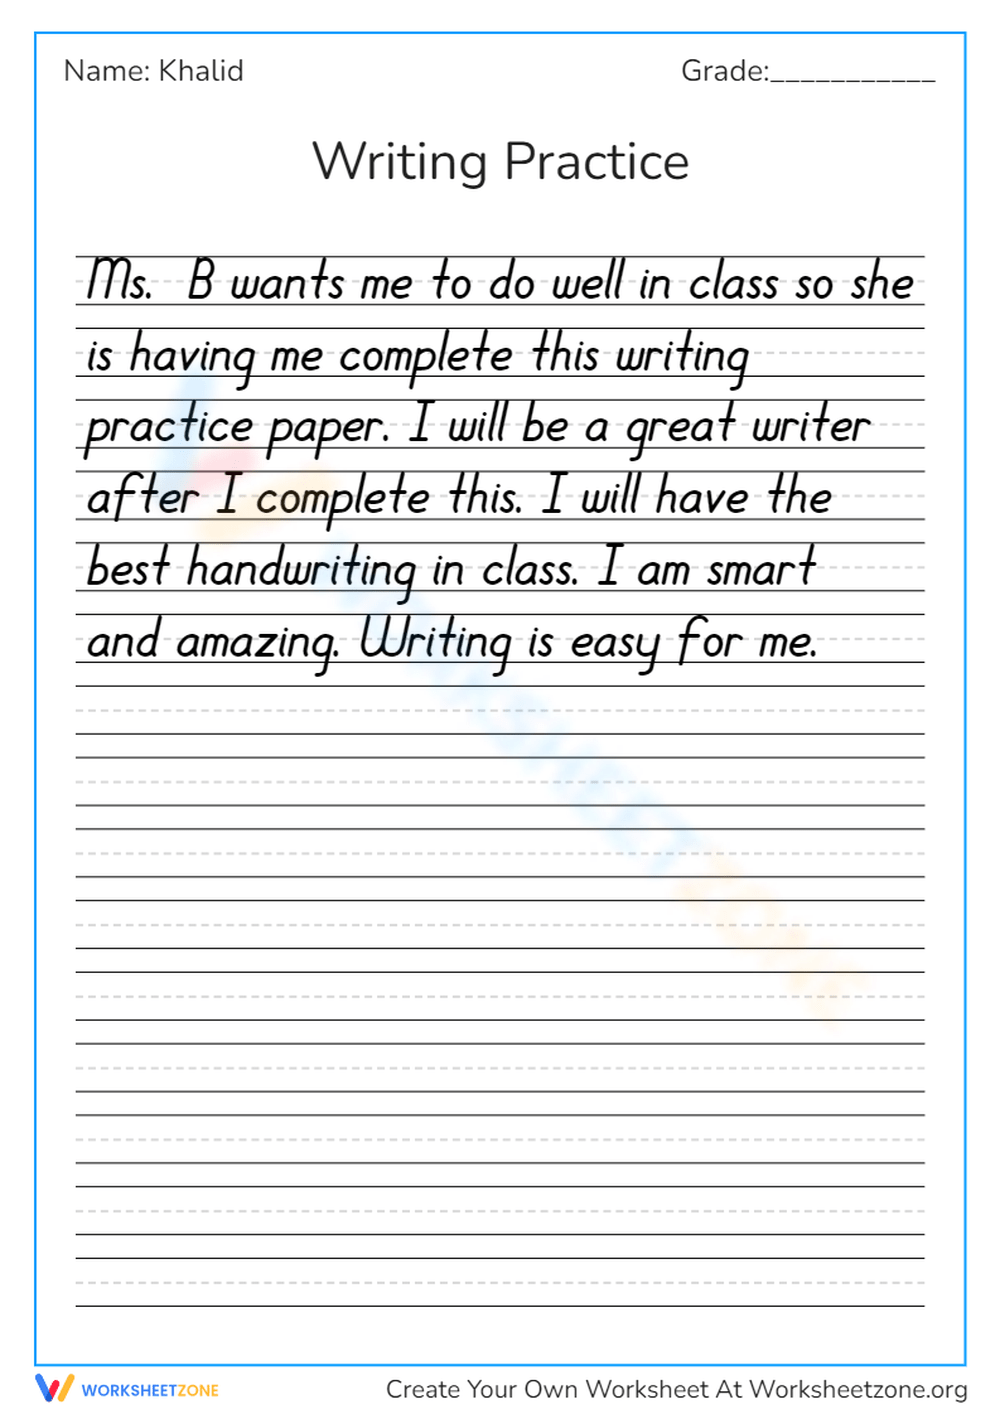 Free Printable Handwriting Paragraph Practice Sheets